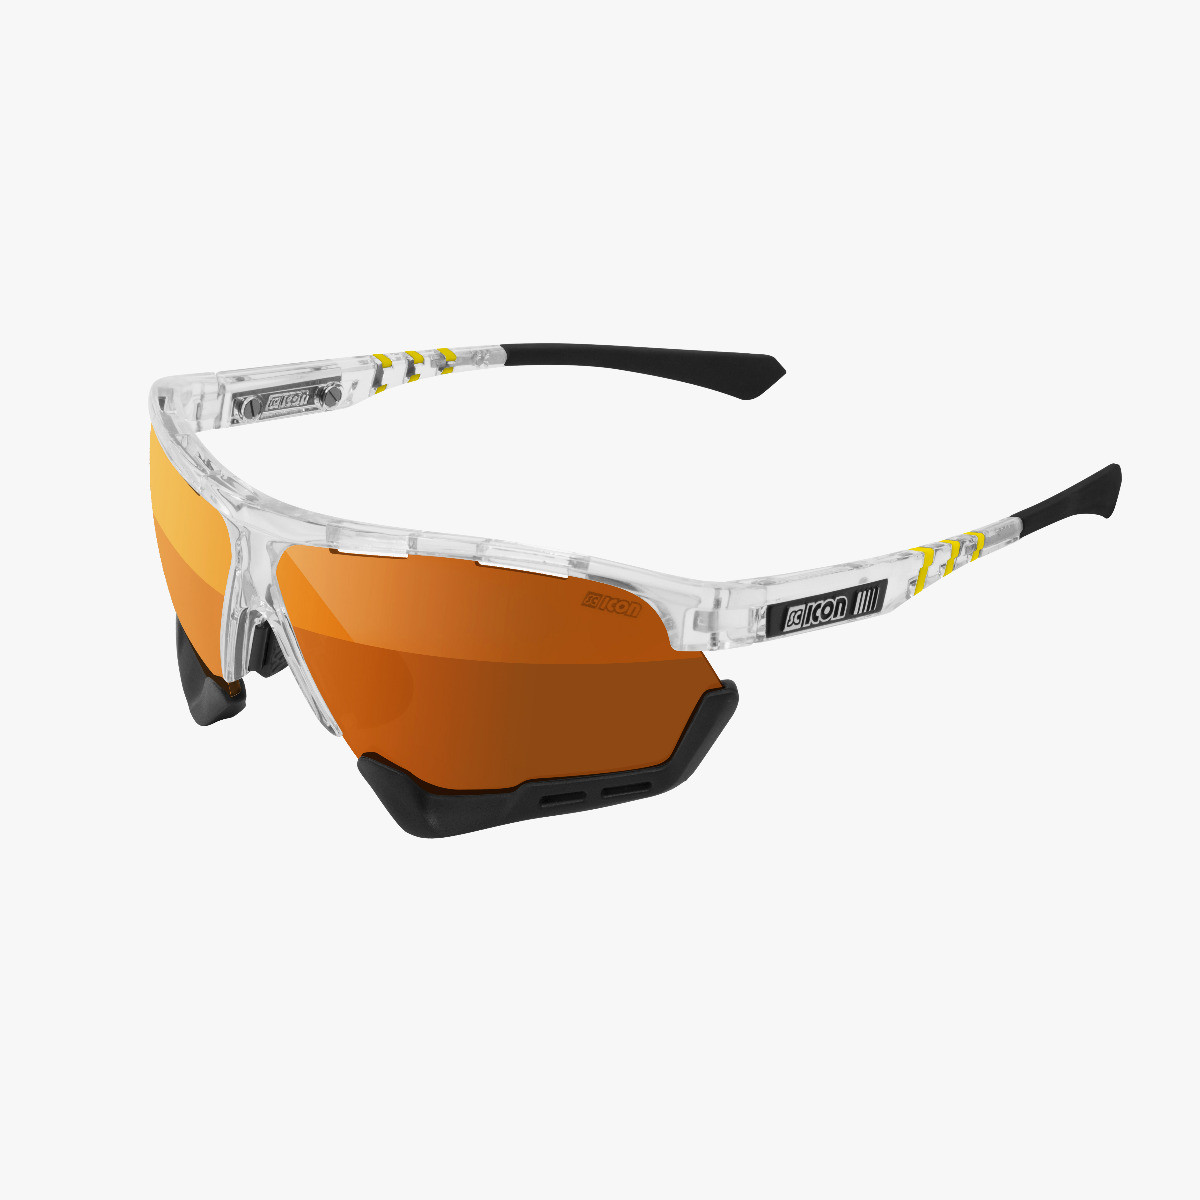 Aerocomfort performance sunglasses scnpp crystal frame bronze lenses EY19070701
